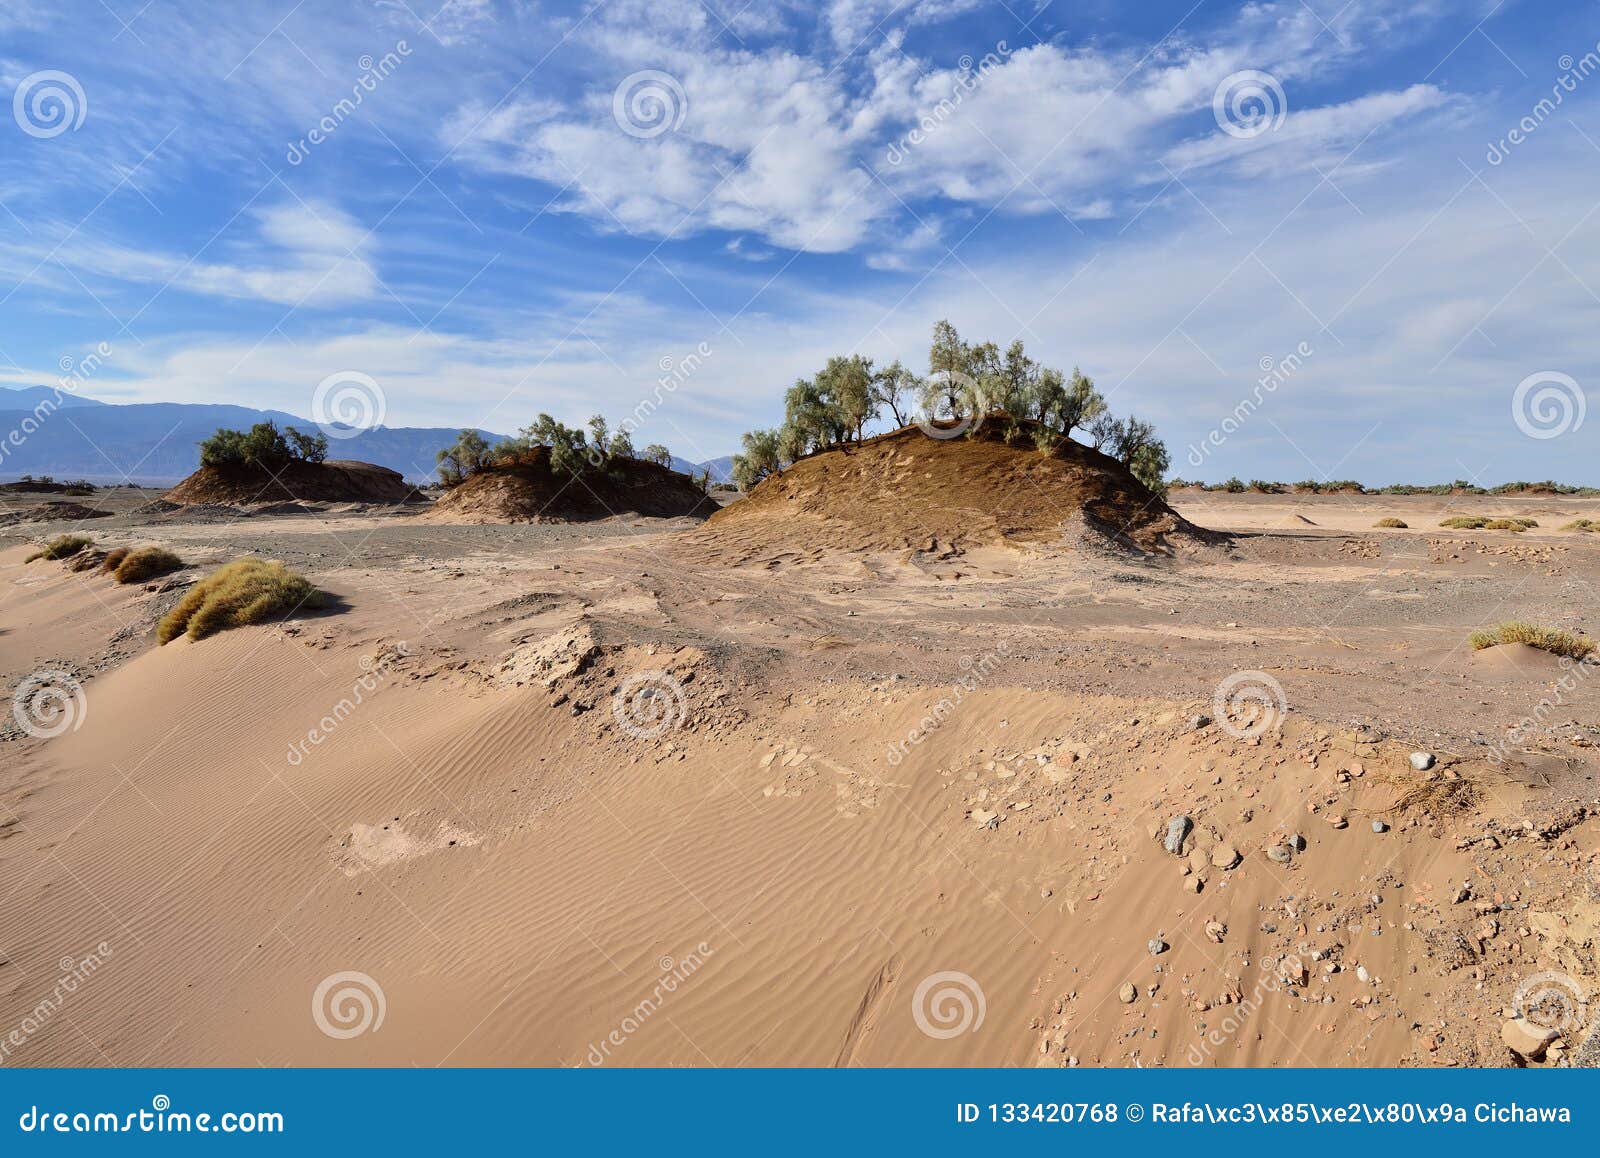 the lut desert locate near kerman, iran